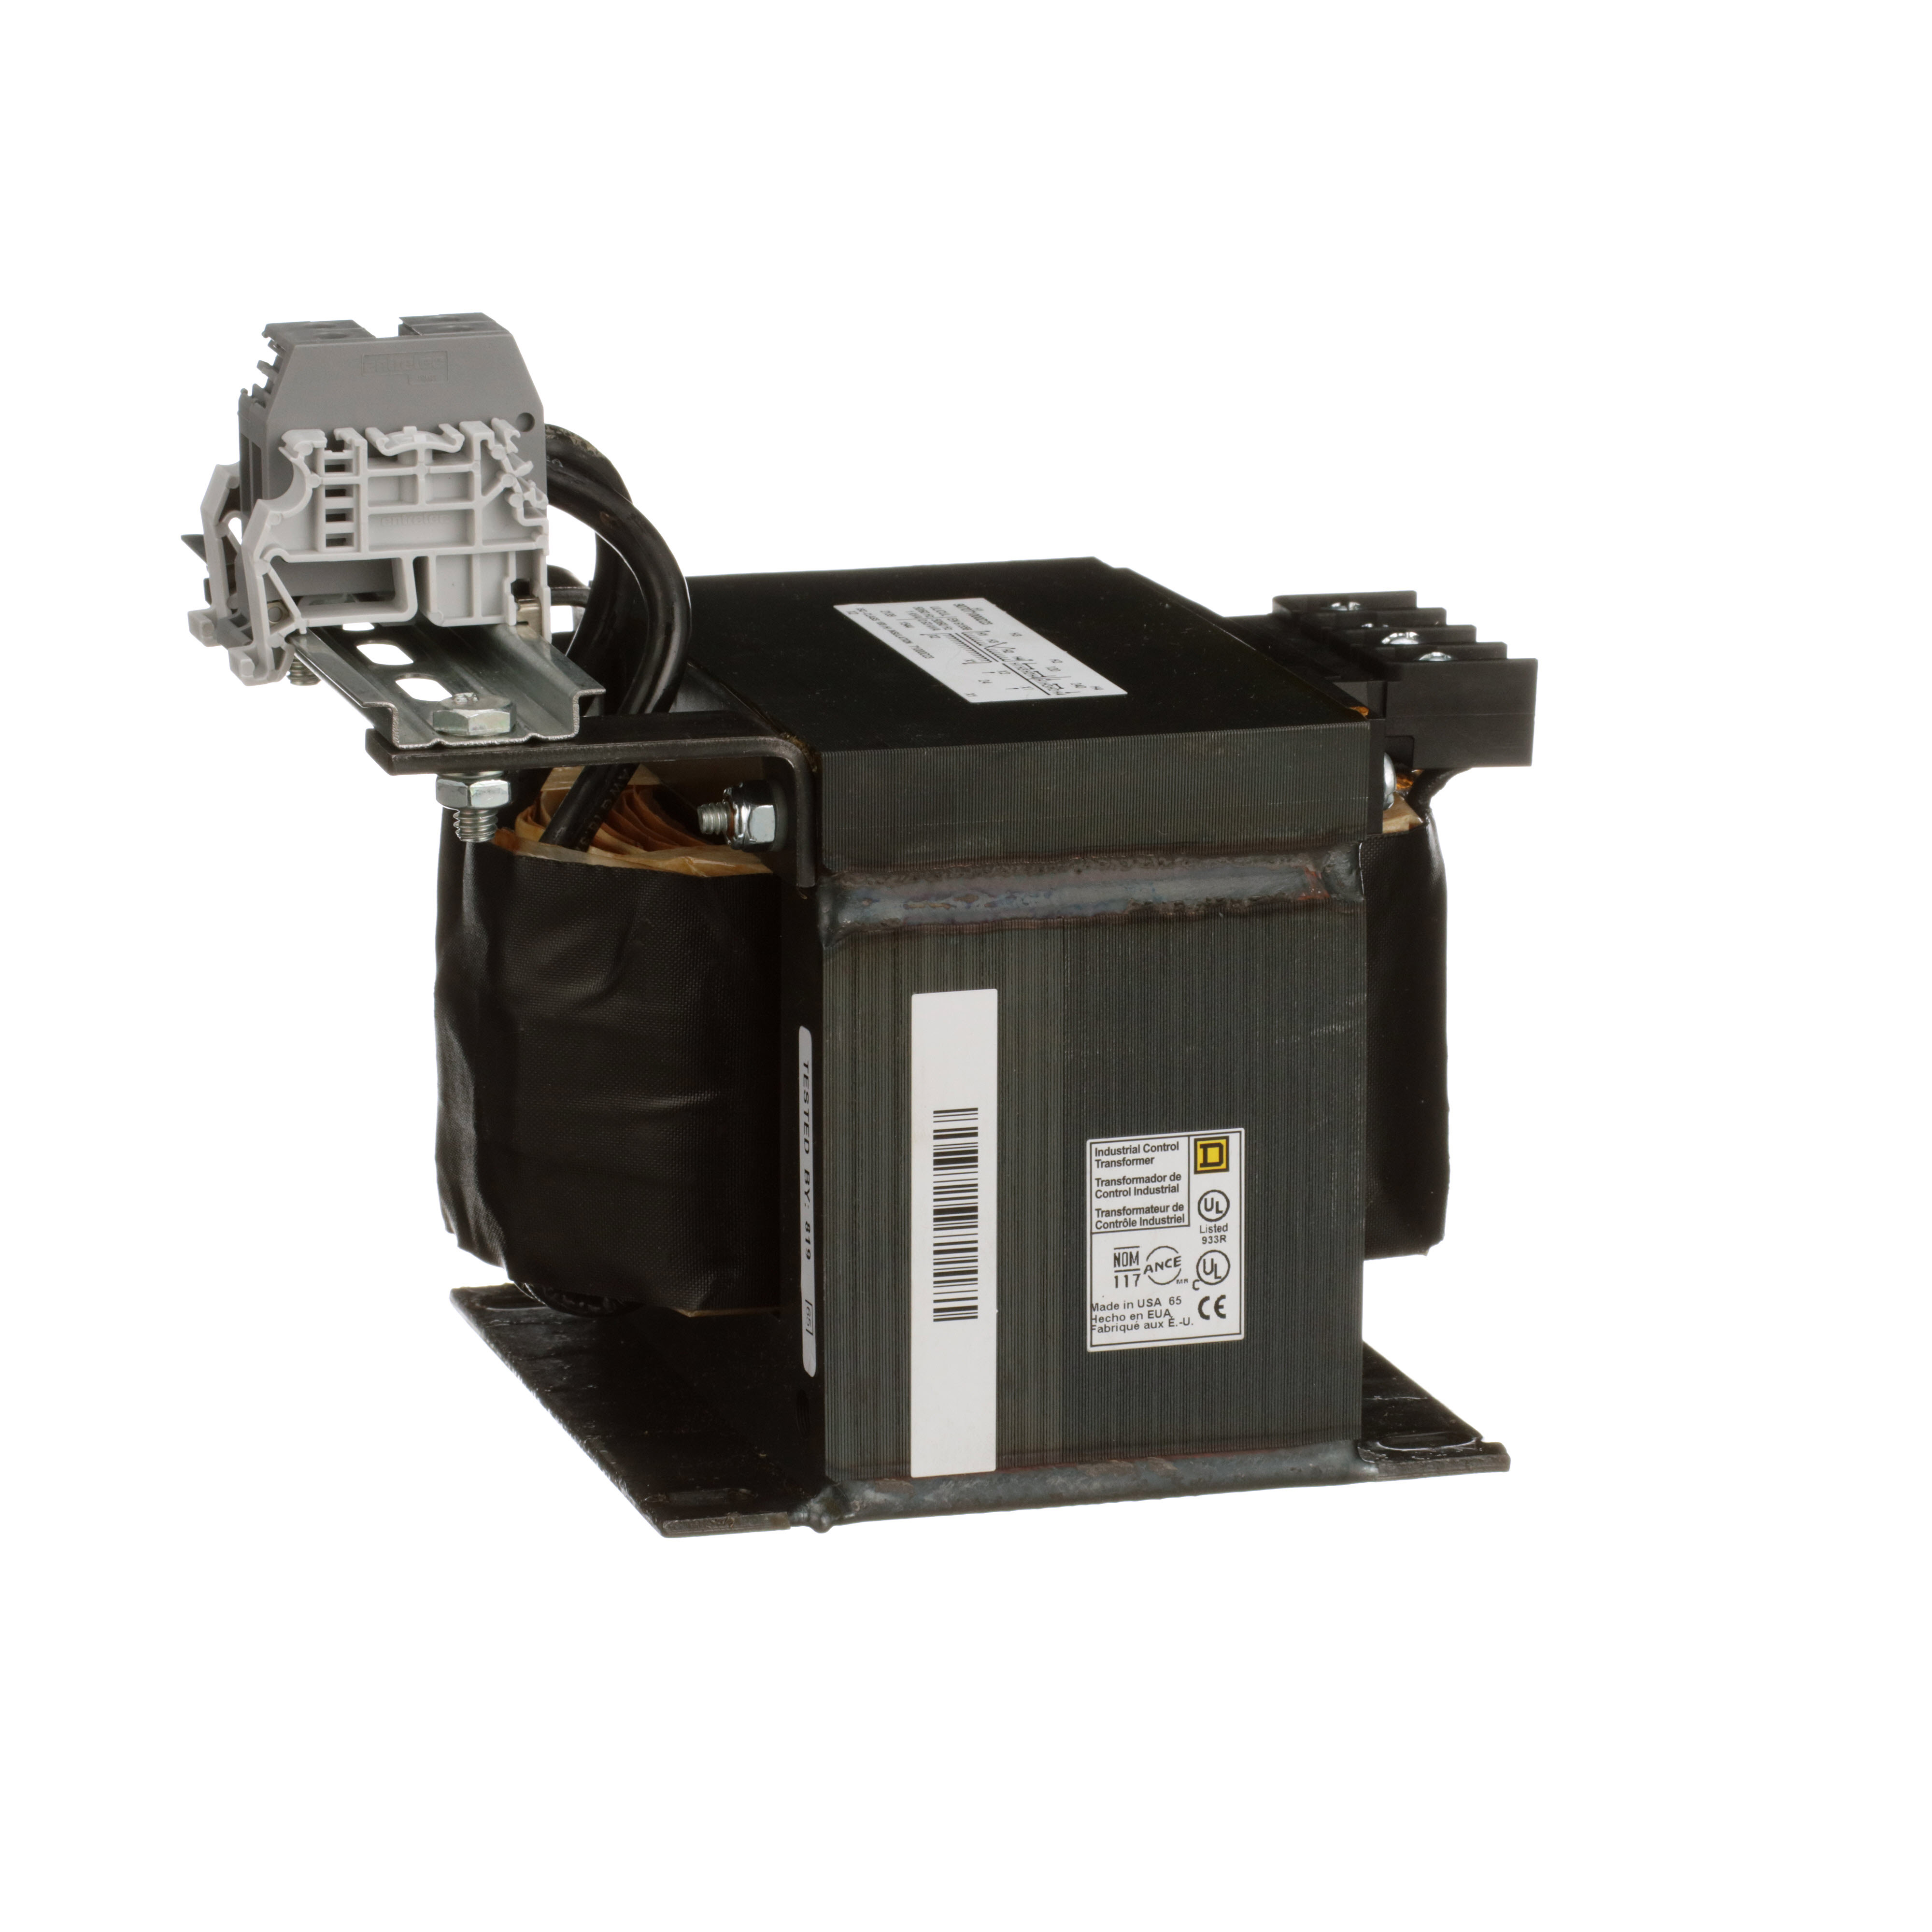 Industrial control transformer, Type T, 1 phase, 1000VA, 120x240V primary, 24V secondary, 50/60Hz